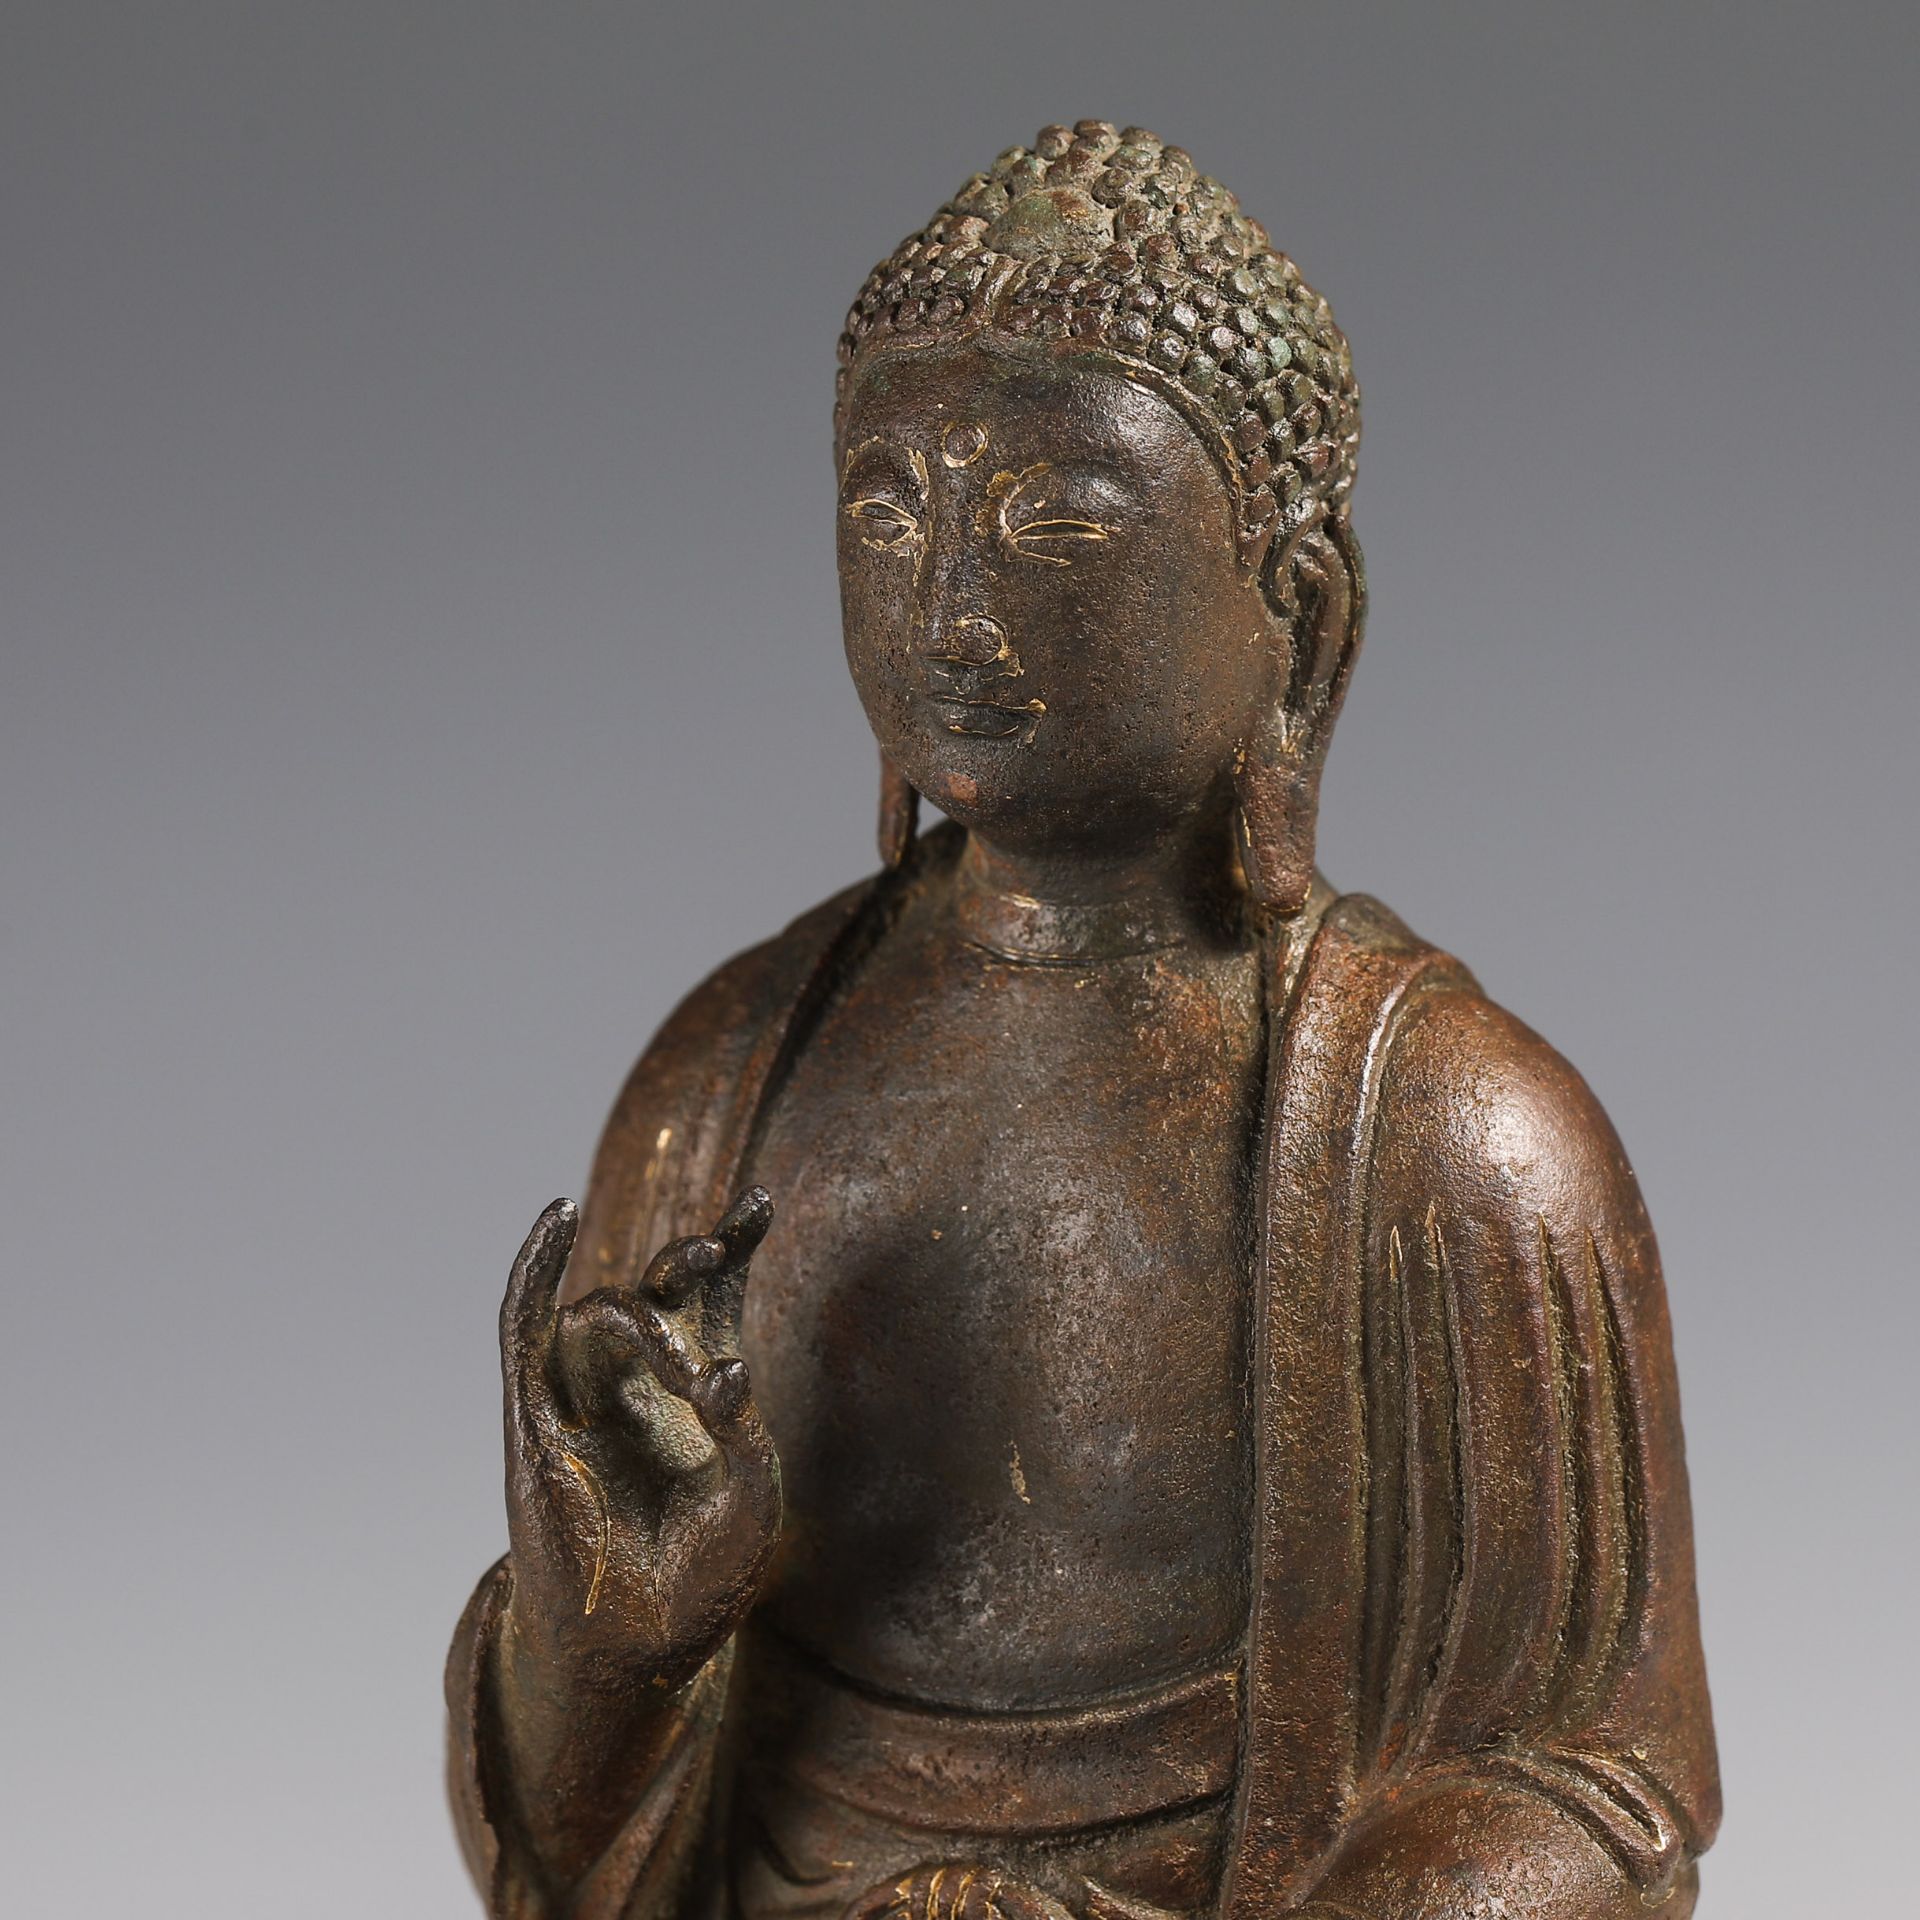 Liao Dynasty Buddha statue - Image 10 of 17